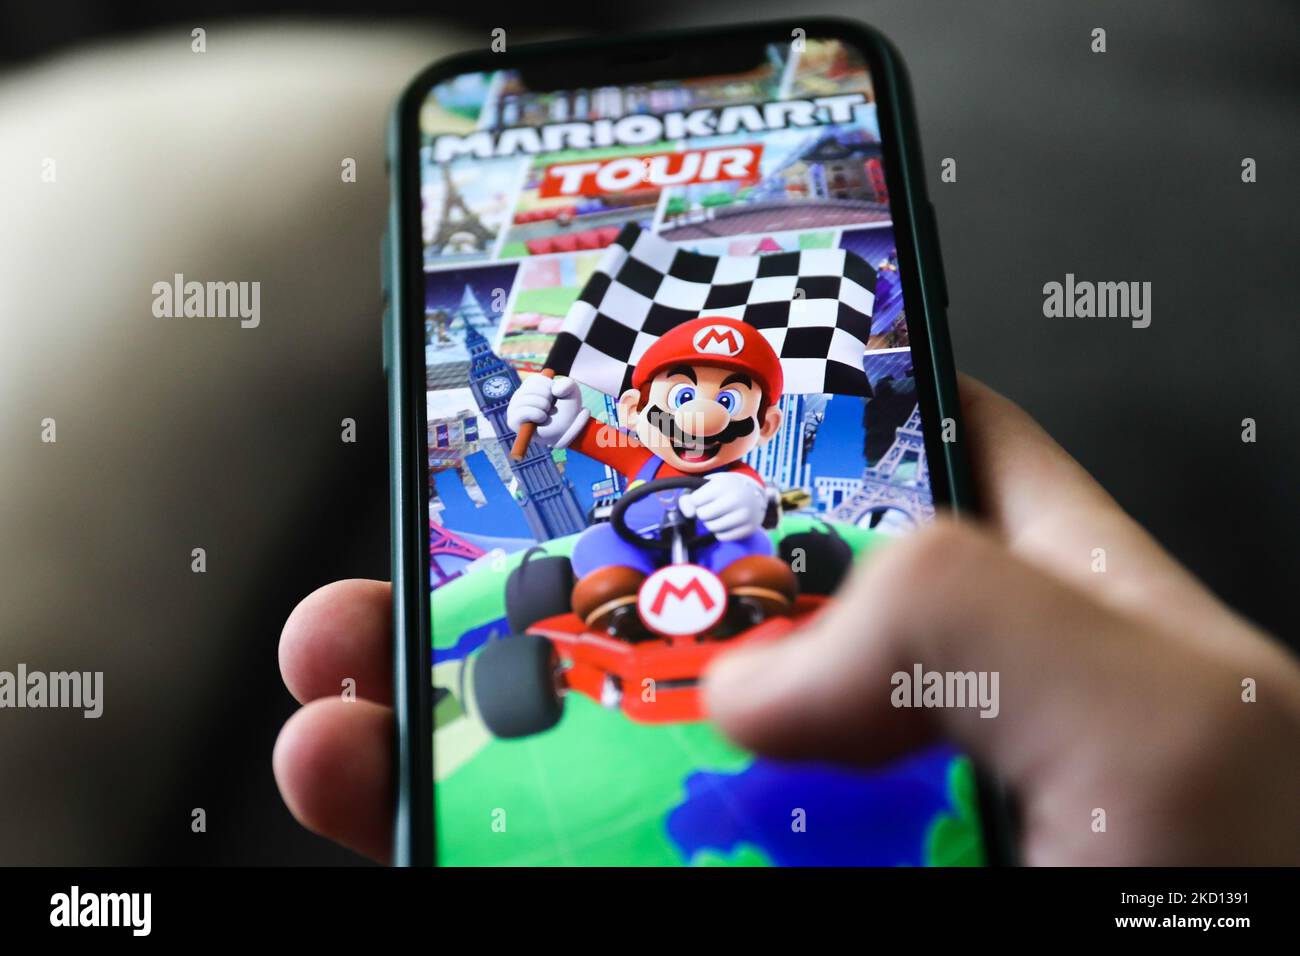 Mariokart Tour logo on the App Store displayed on a phone screen is seen in this illustration photo taken in Krakow, Poland on January 23, 2022. (Photo by Jakub Porzycki/NurPhoto) Stock Photo